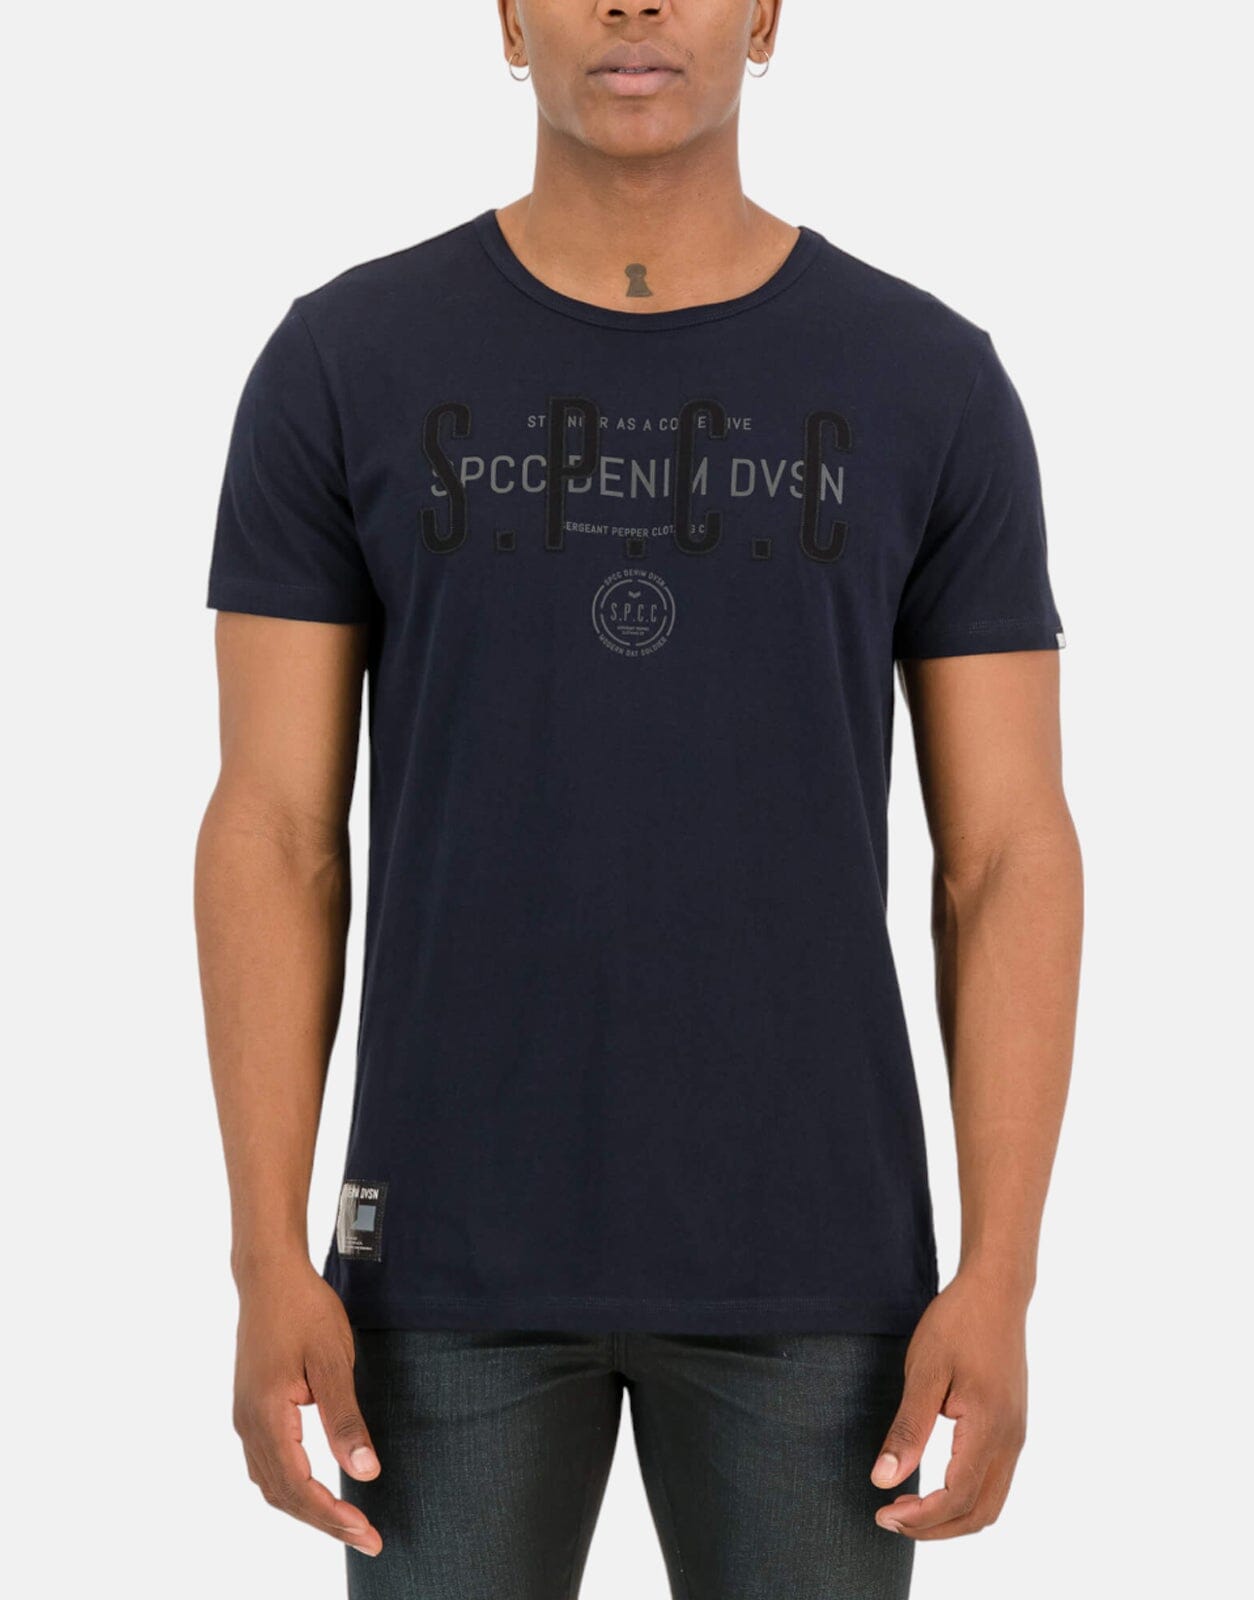 SPCC Radley Navy T-Shirt - Subwear